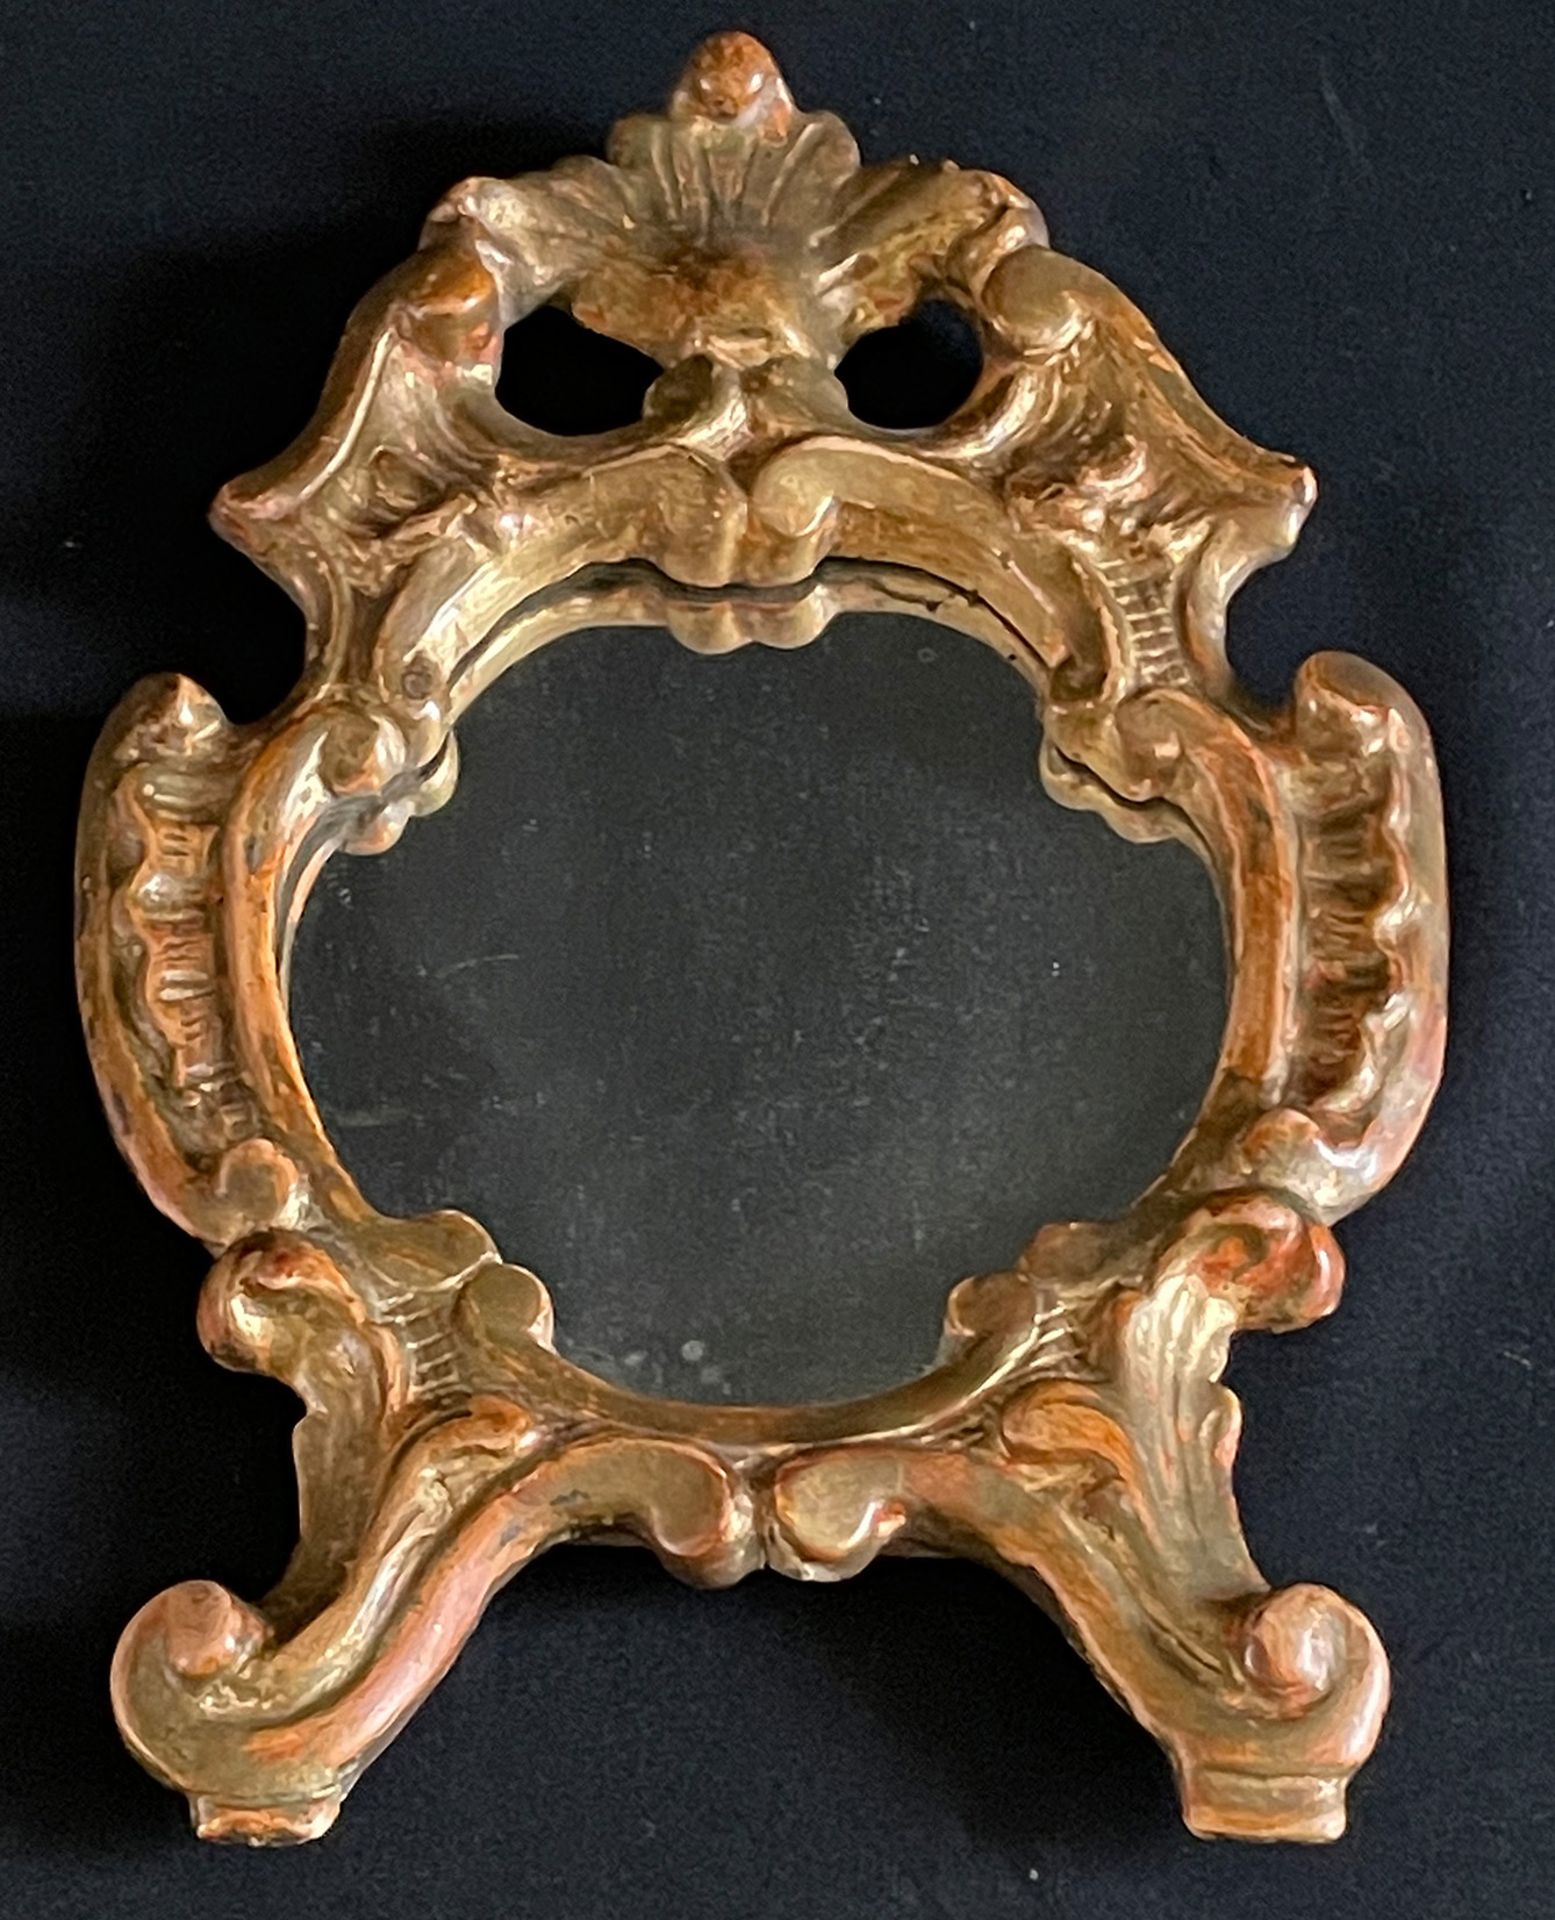 Kleiner Barockspiegel, 18. Jh., Holz, Polimentvergoldung, barocke Ornamentik, Altersspuren, H. 35,